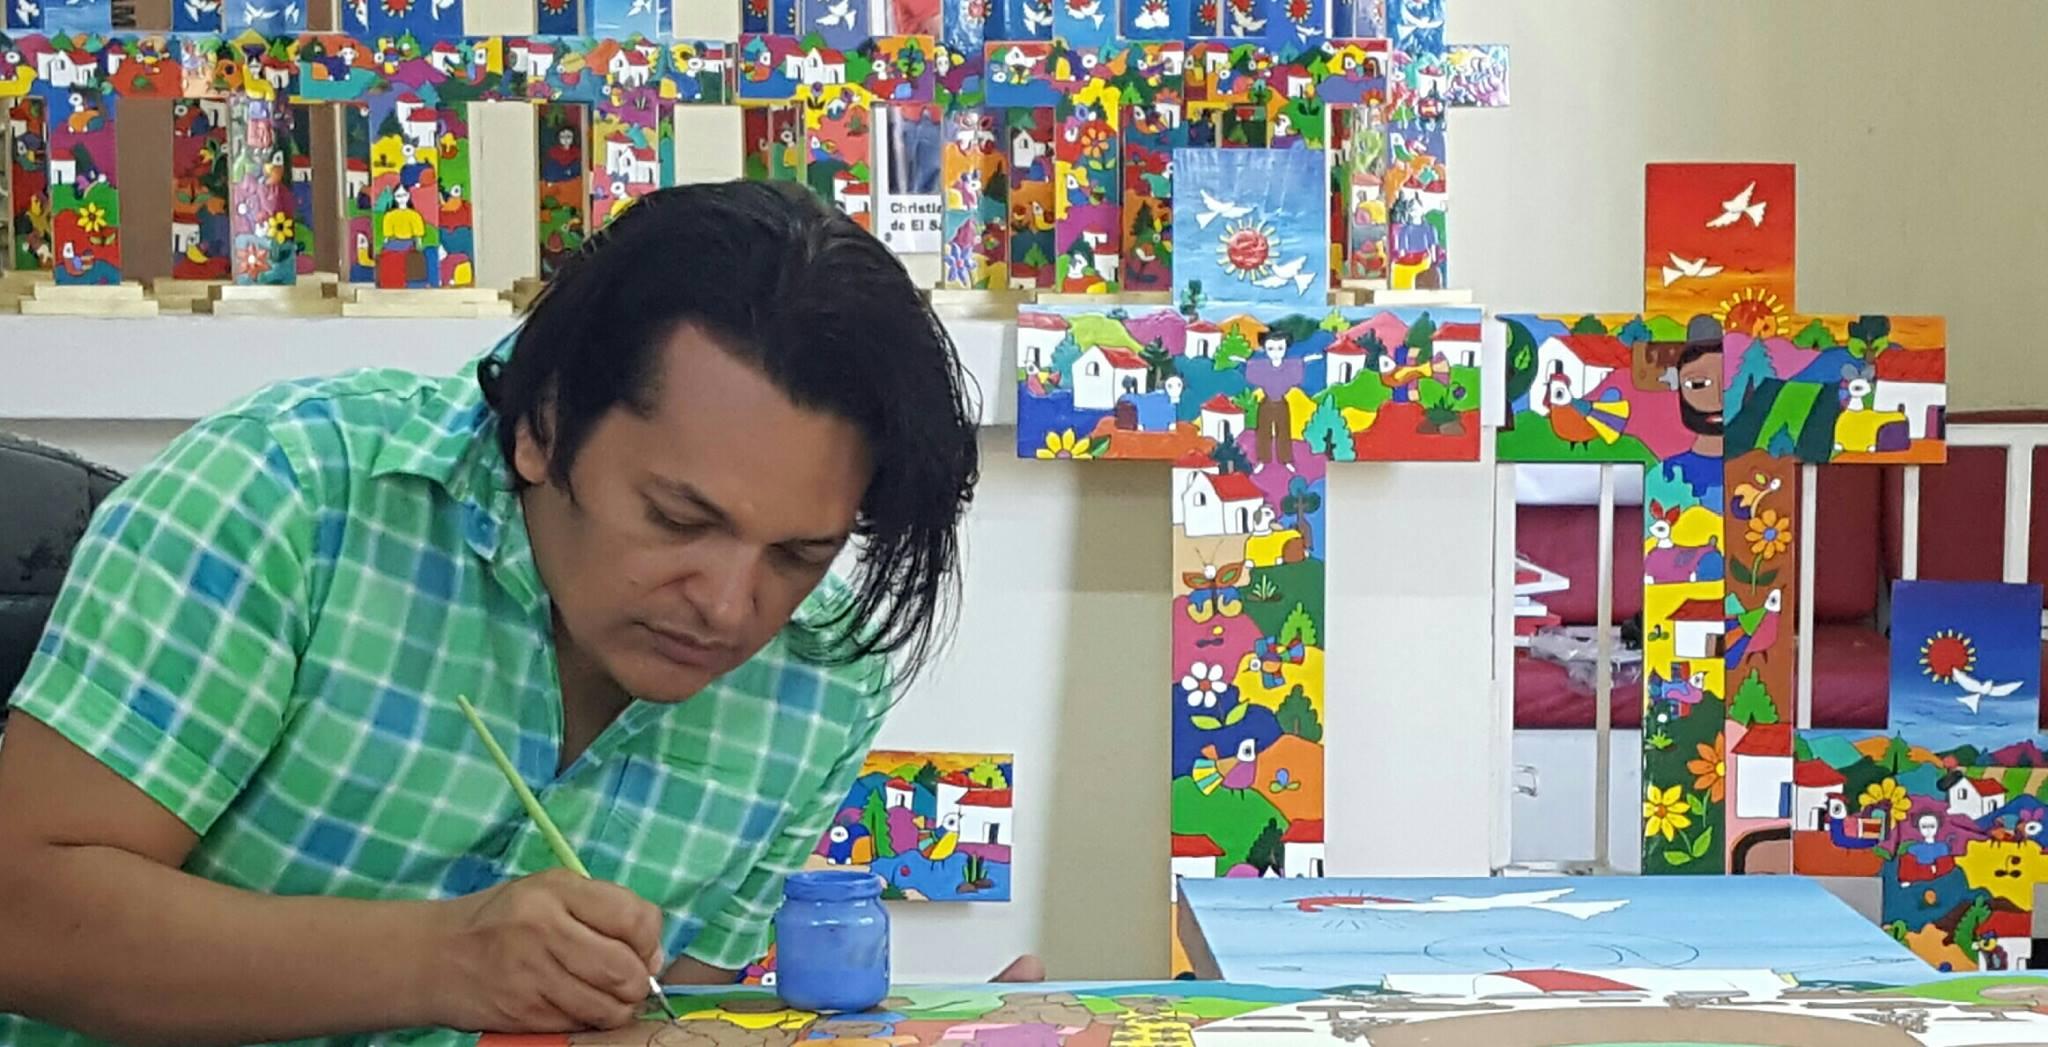 Christian Chavarria Ayala, Künstler aus El Salvador, in seinem Atelier. Foto: Juan Arrieta